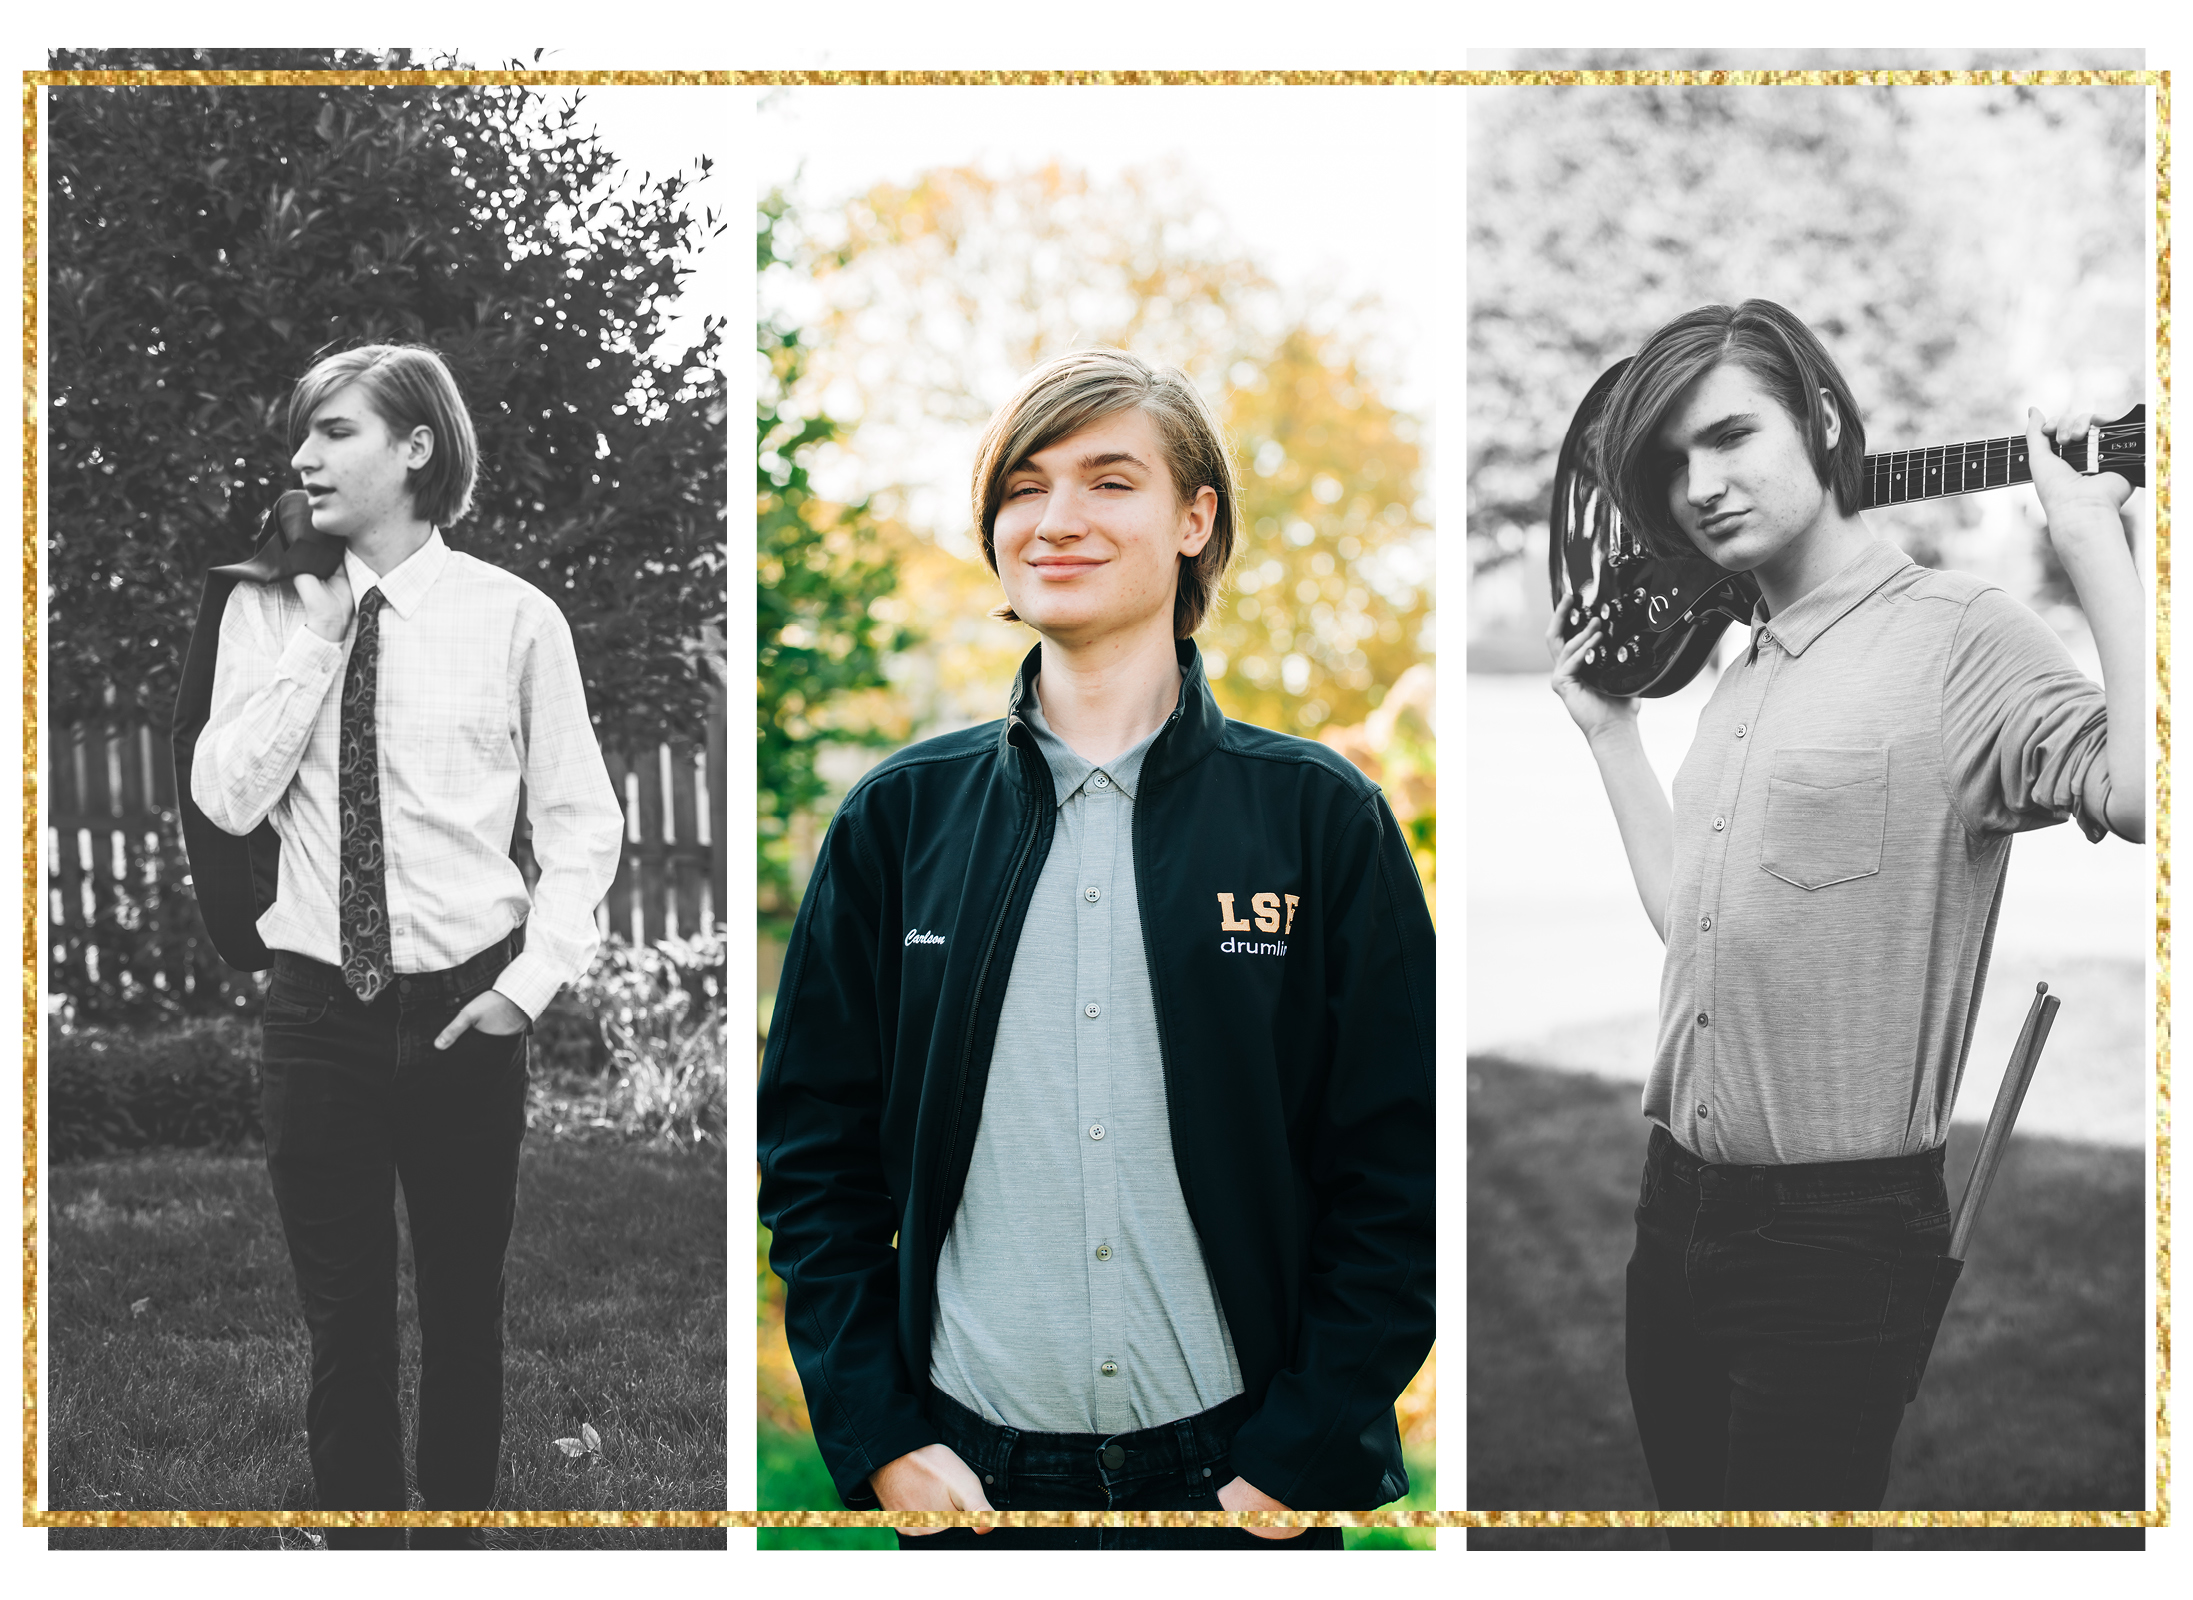 Senior boy picture collage